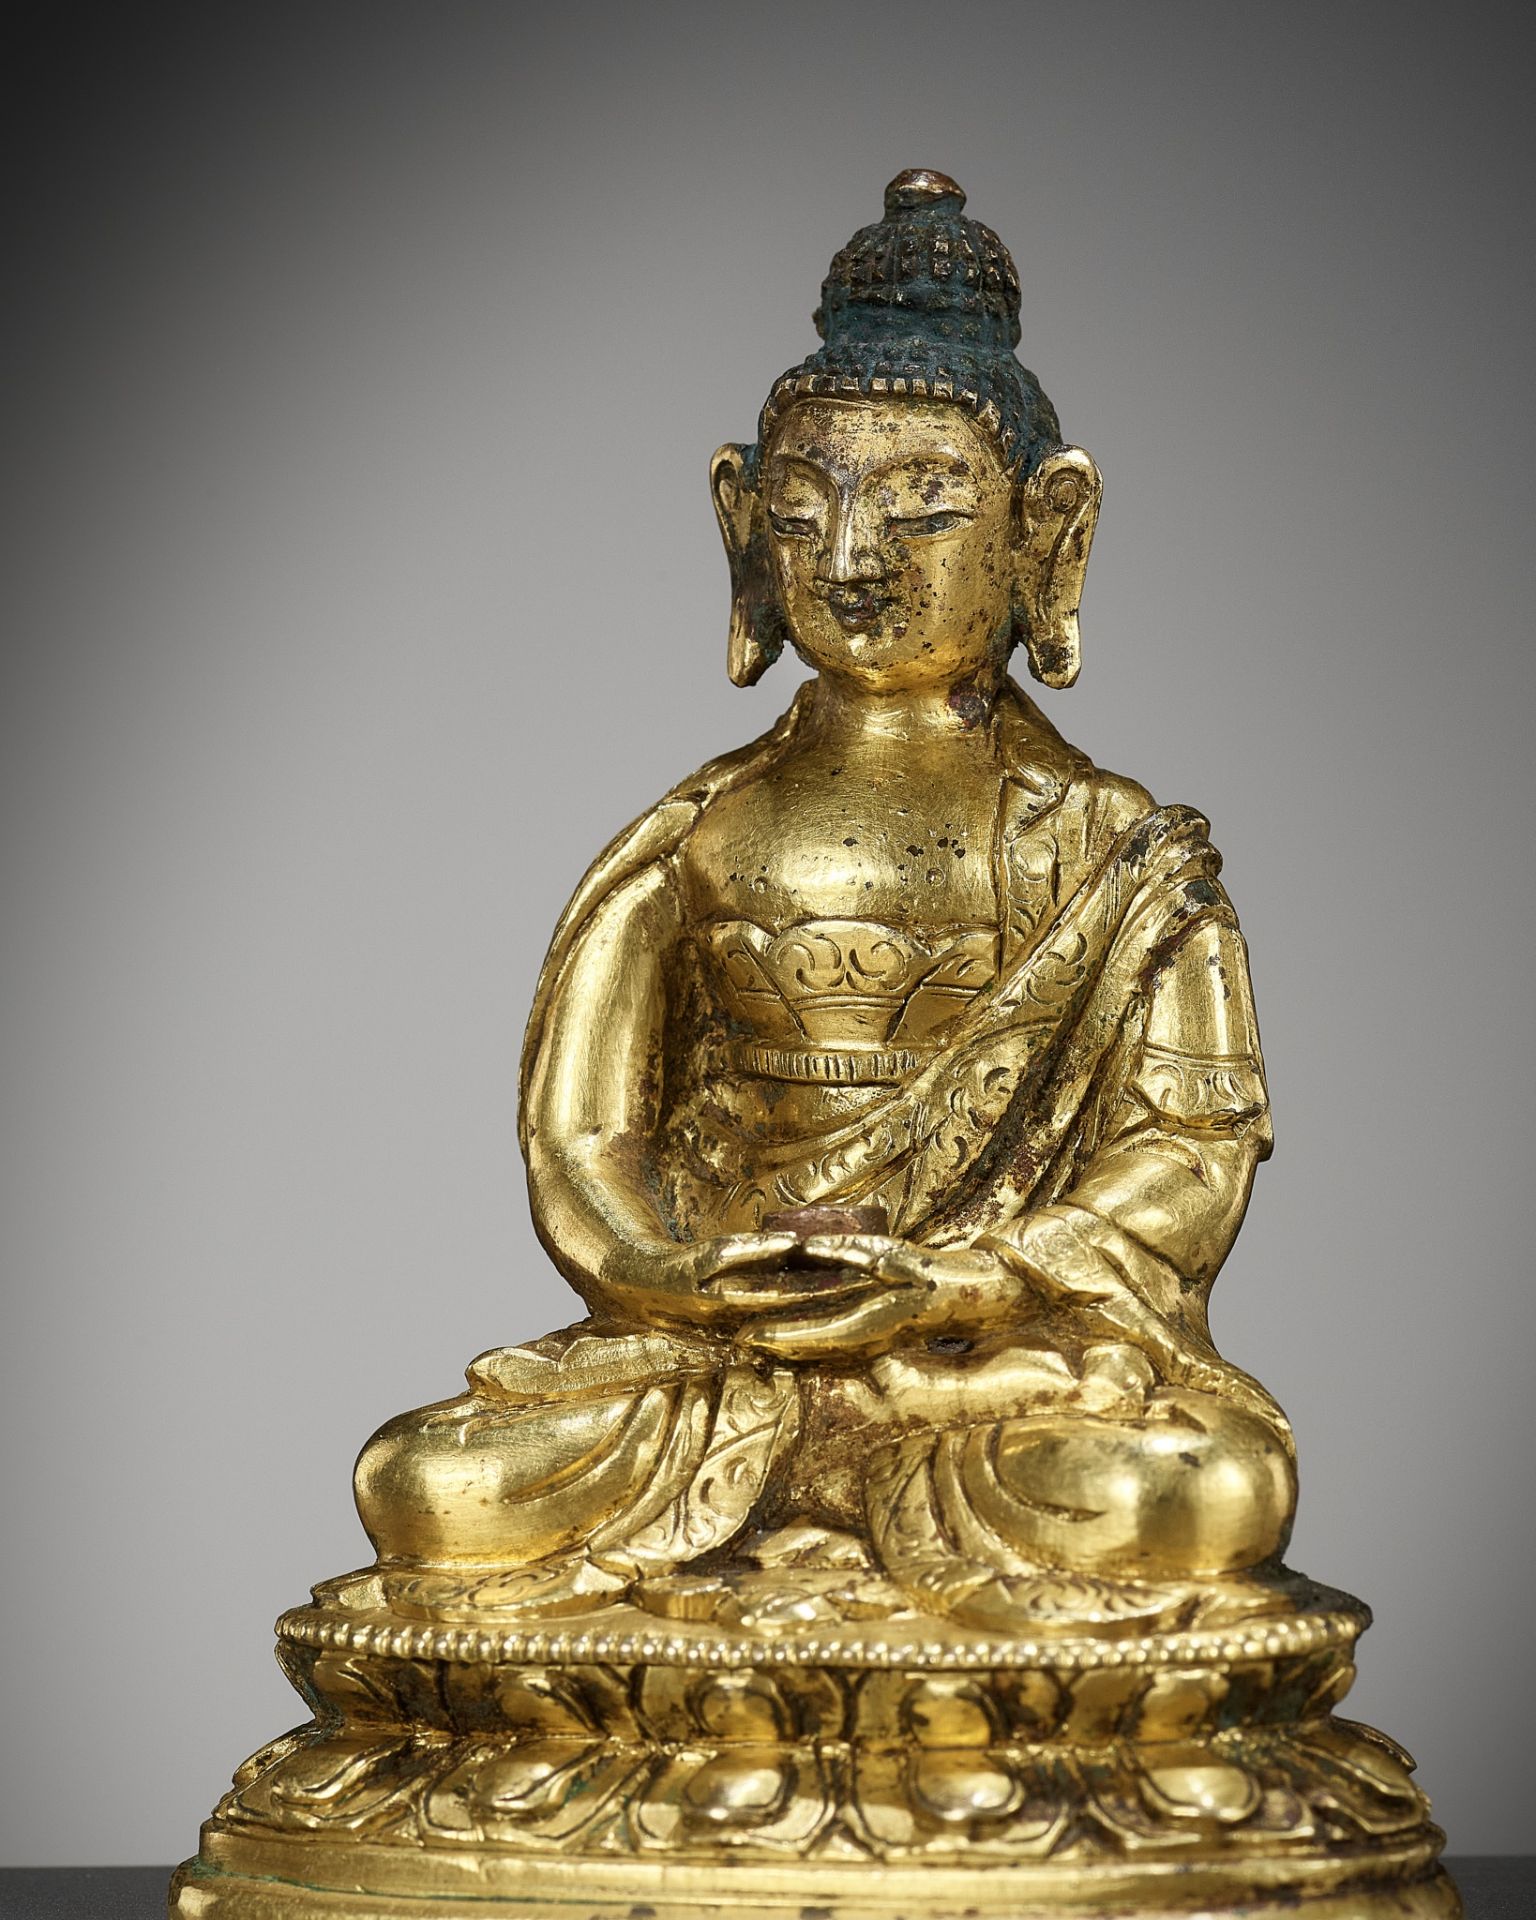 A SMALL GILT BRONZE FIGURE OF BUDDHA AMITABHA, 17TH-18TH CENTURY